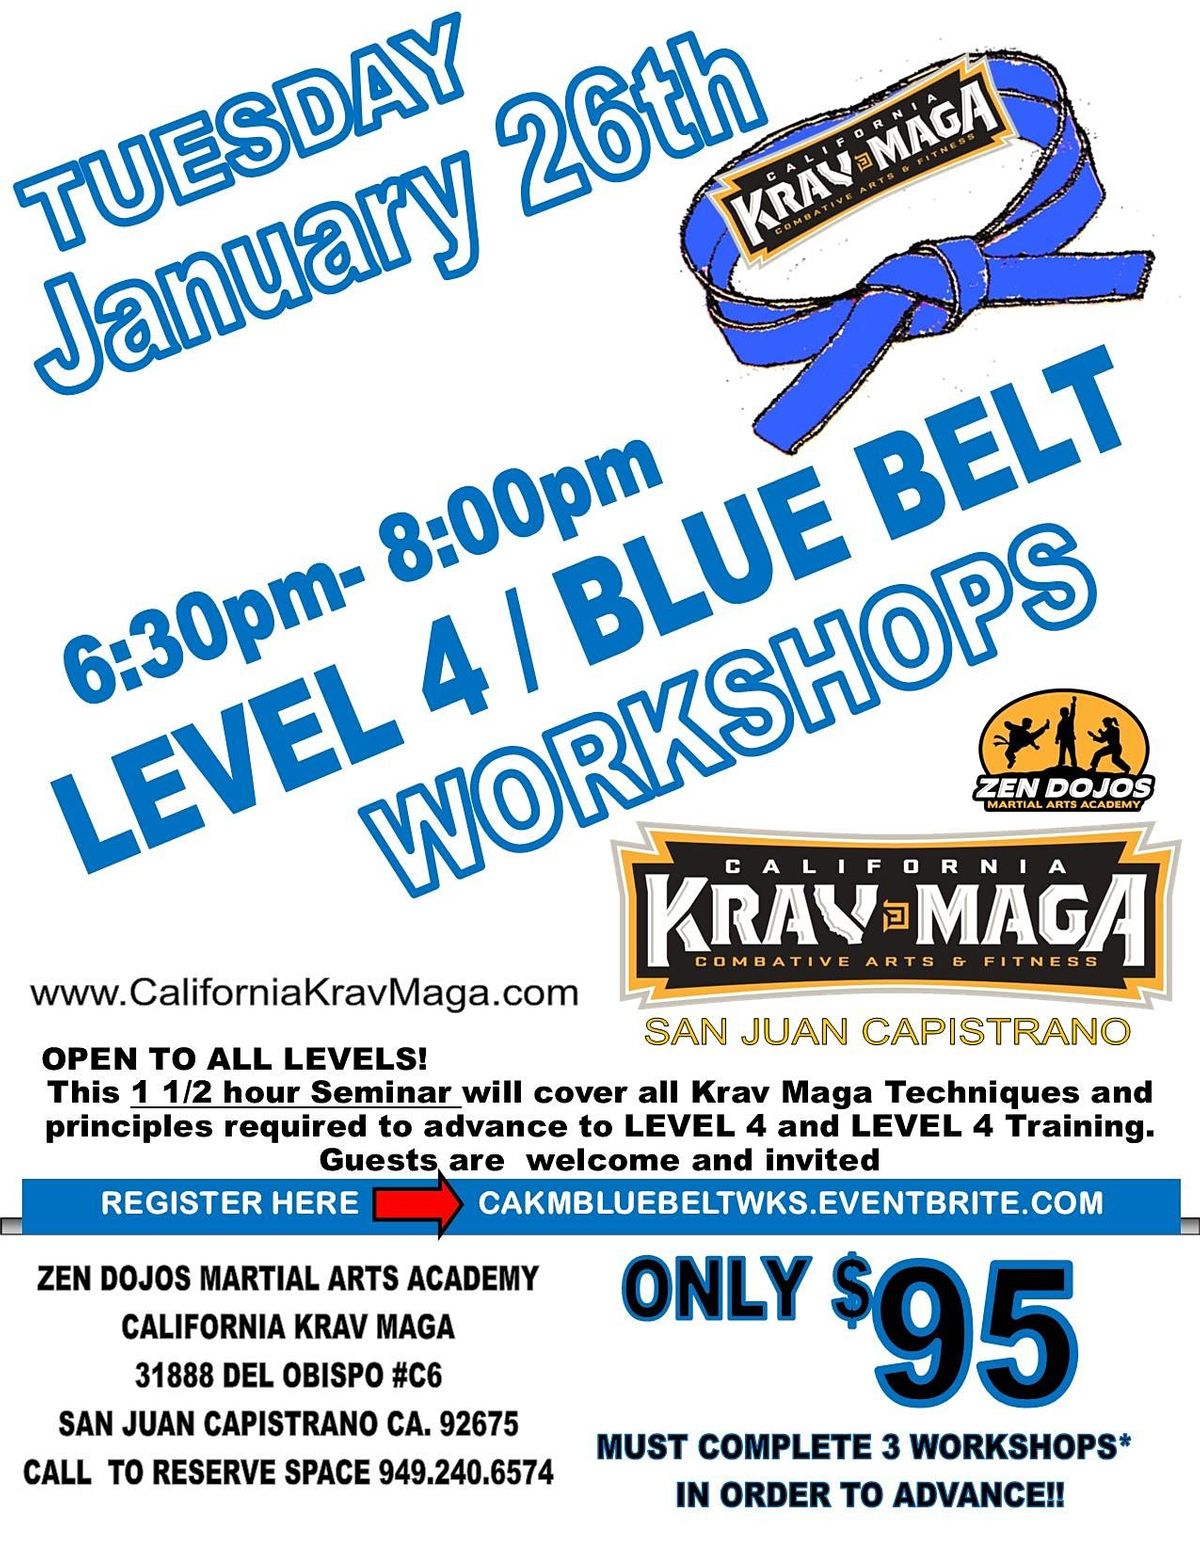 Krav Maga Blue Belt Workshop, Zen Dojos Martial Arts Academy/California